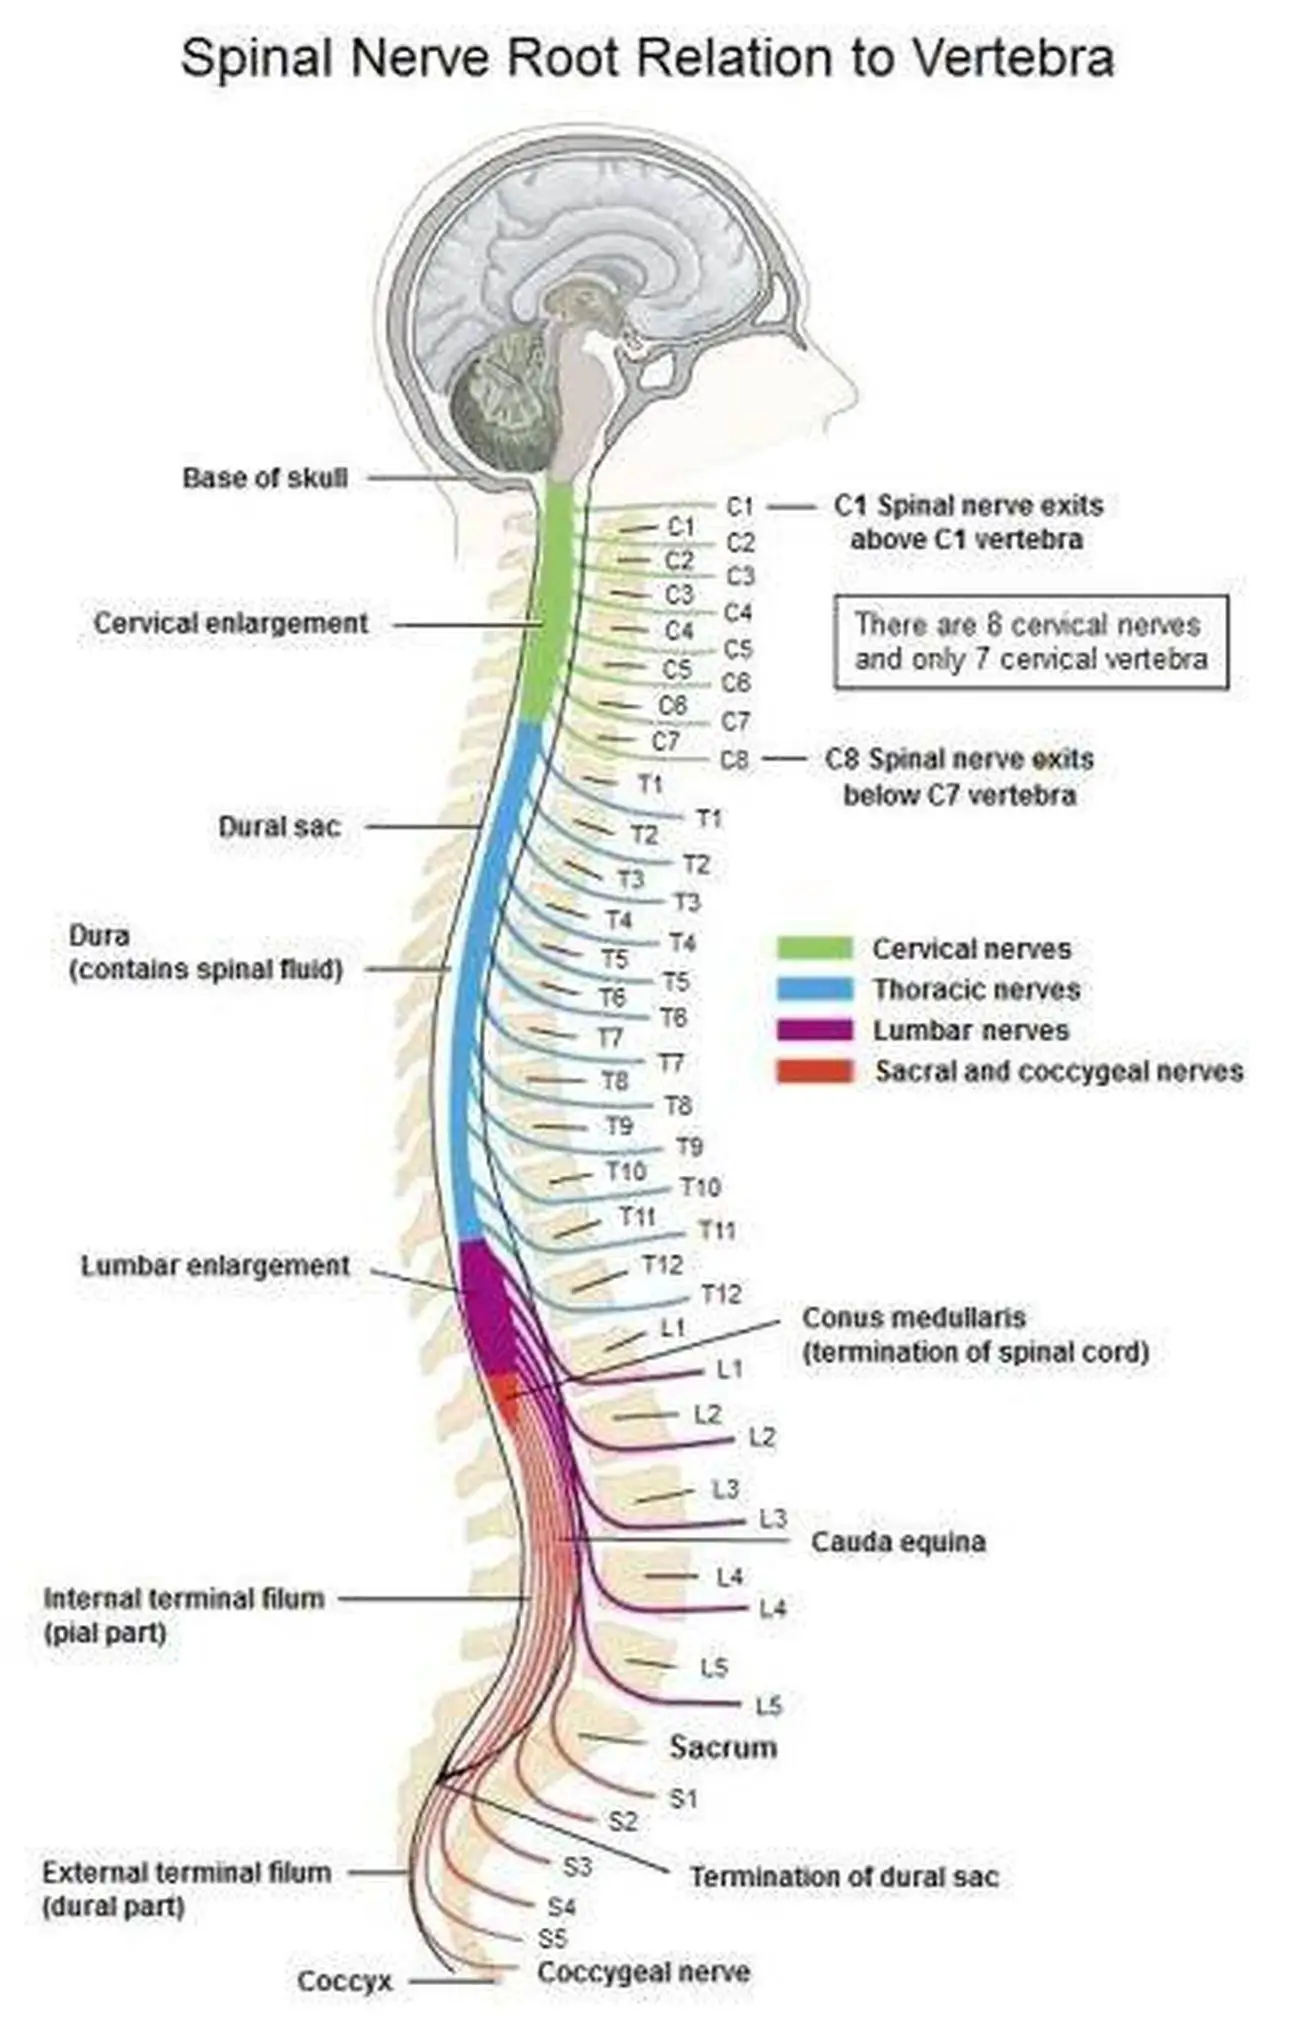 Pictures Of Cervical Spinal Nerve